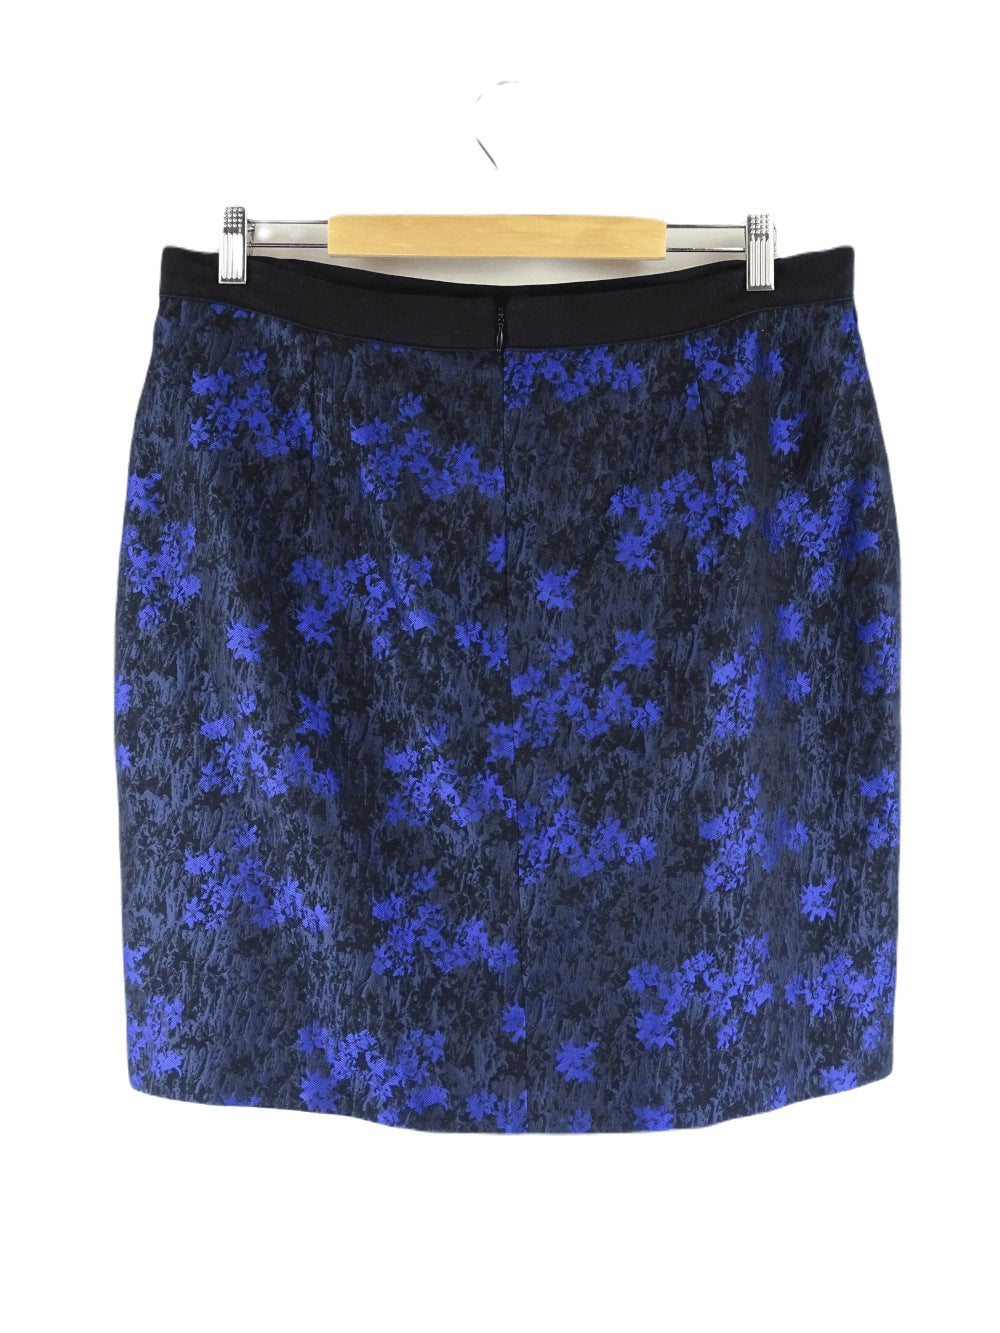 Jigsaw Black and Blue Mini Skirt 16